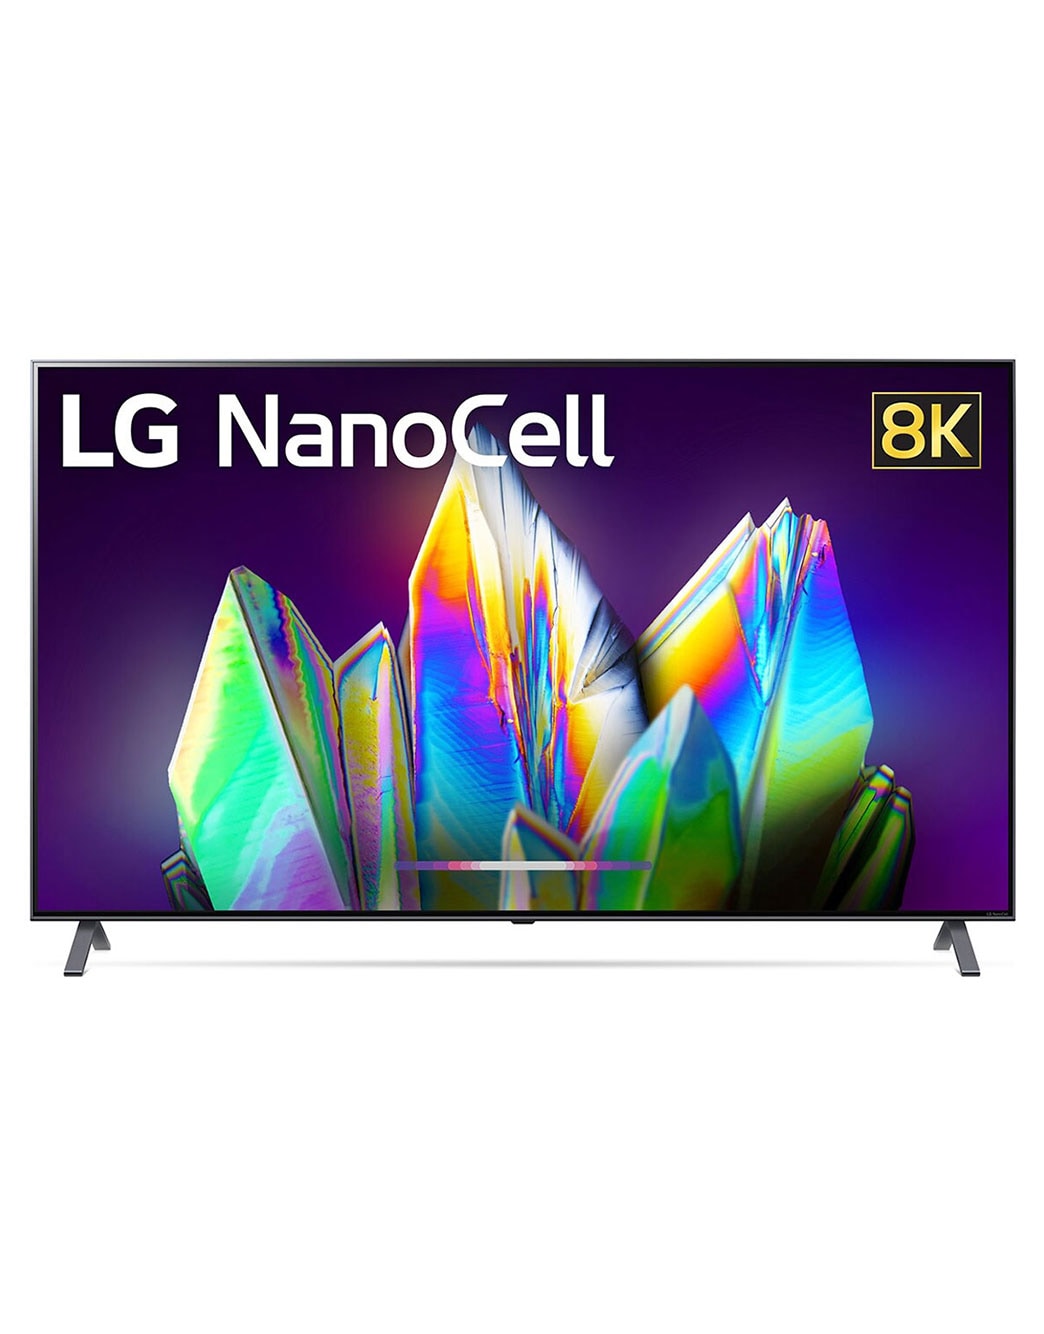 LG NanoCell TV 8K w/ AI ThinQ™ - 65 inch Smart TV